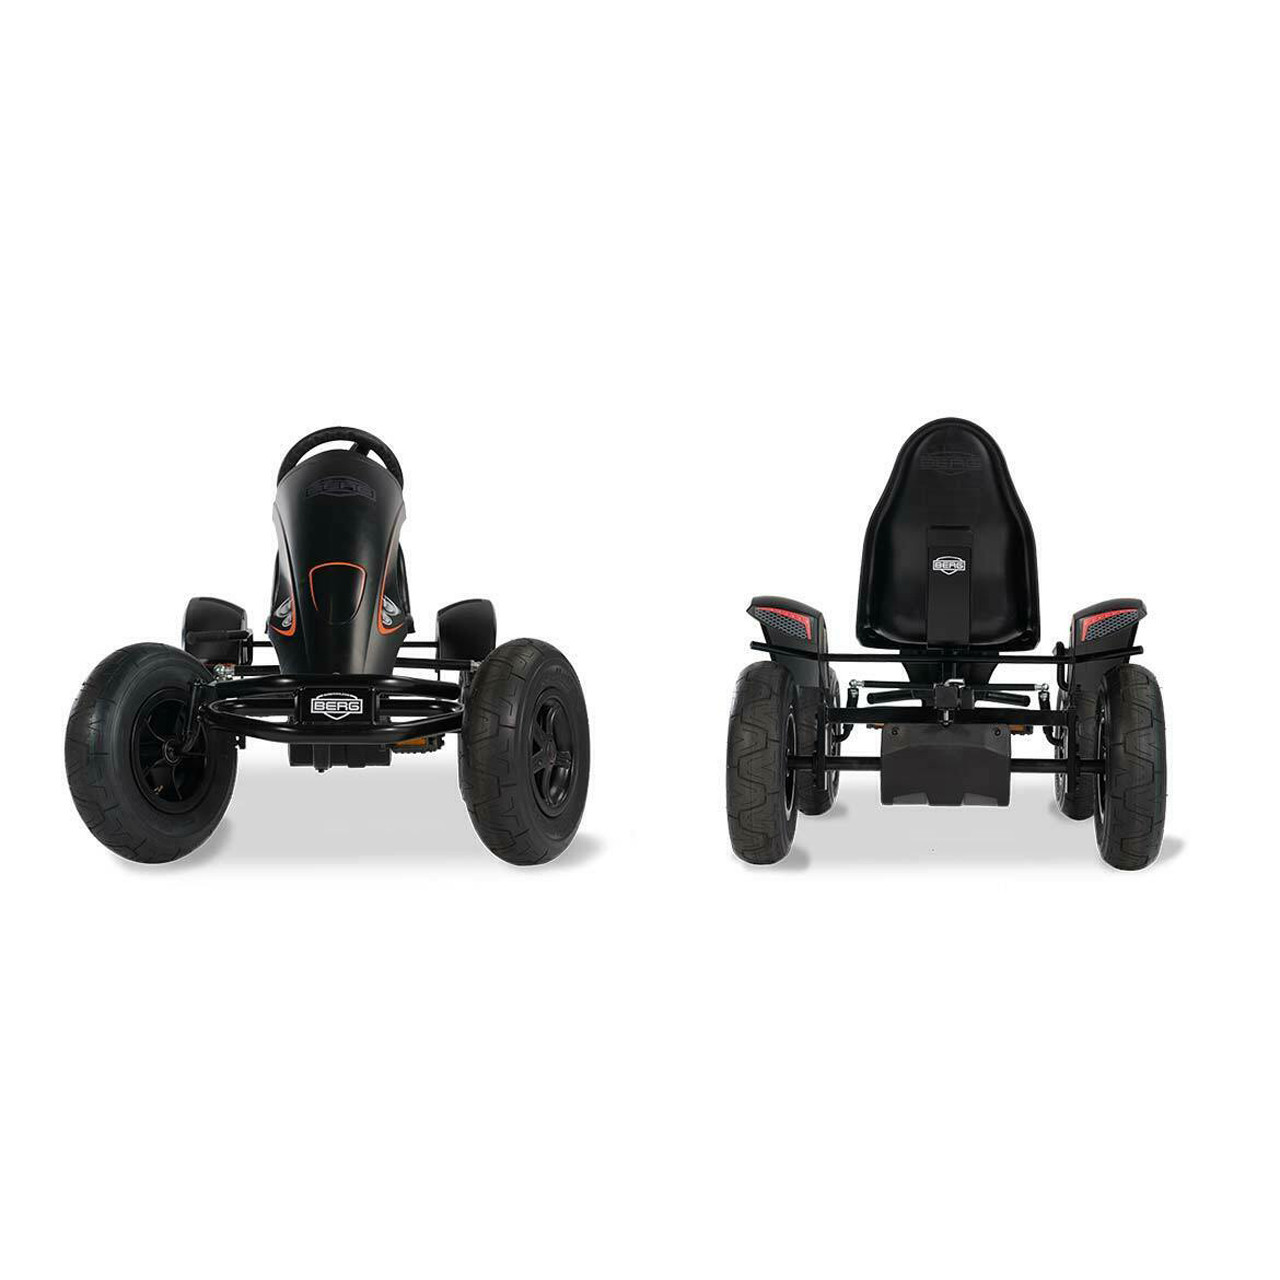 Buy 5 Years Upwards Pedal Go Karts | BERG XL Black Edition BFR Go-kart